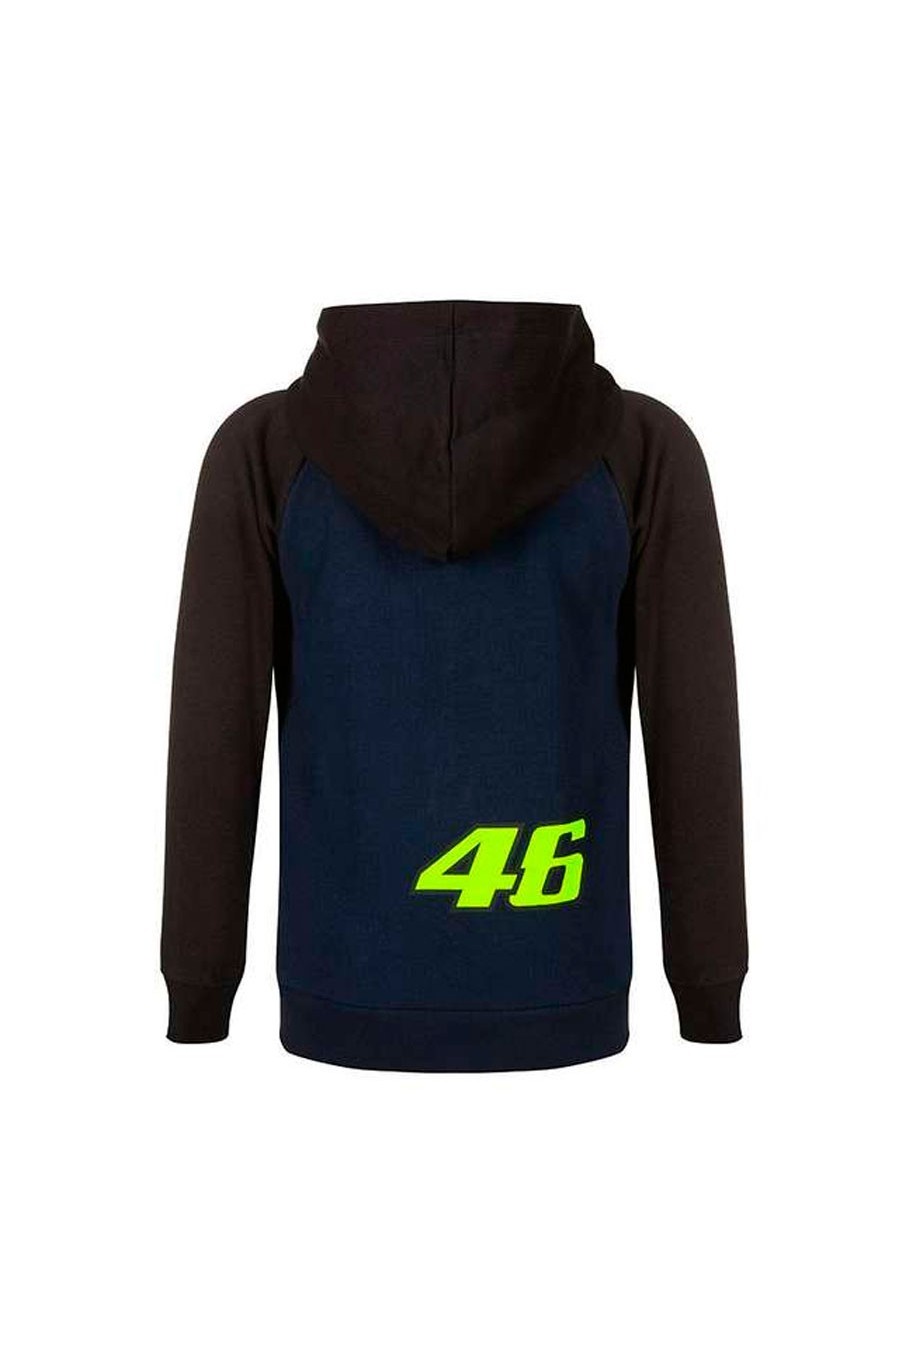 Valentino Rossi 46 kindersweater